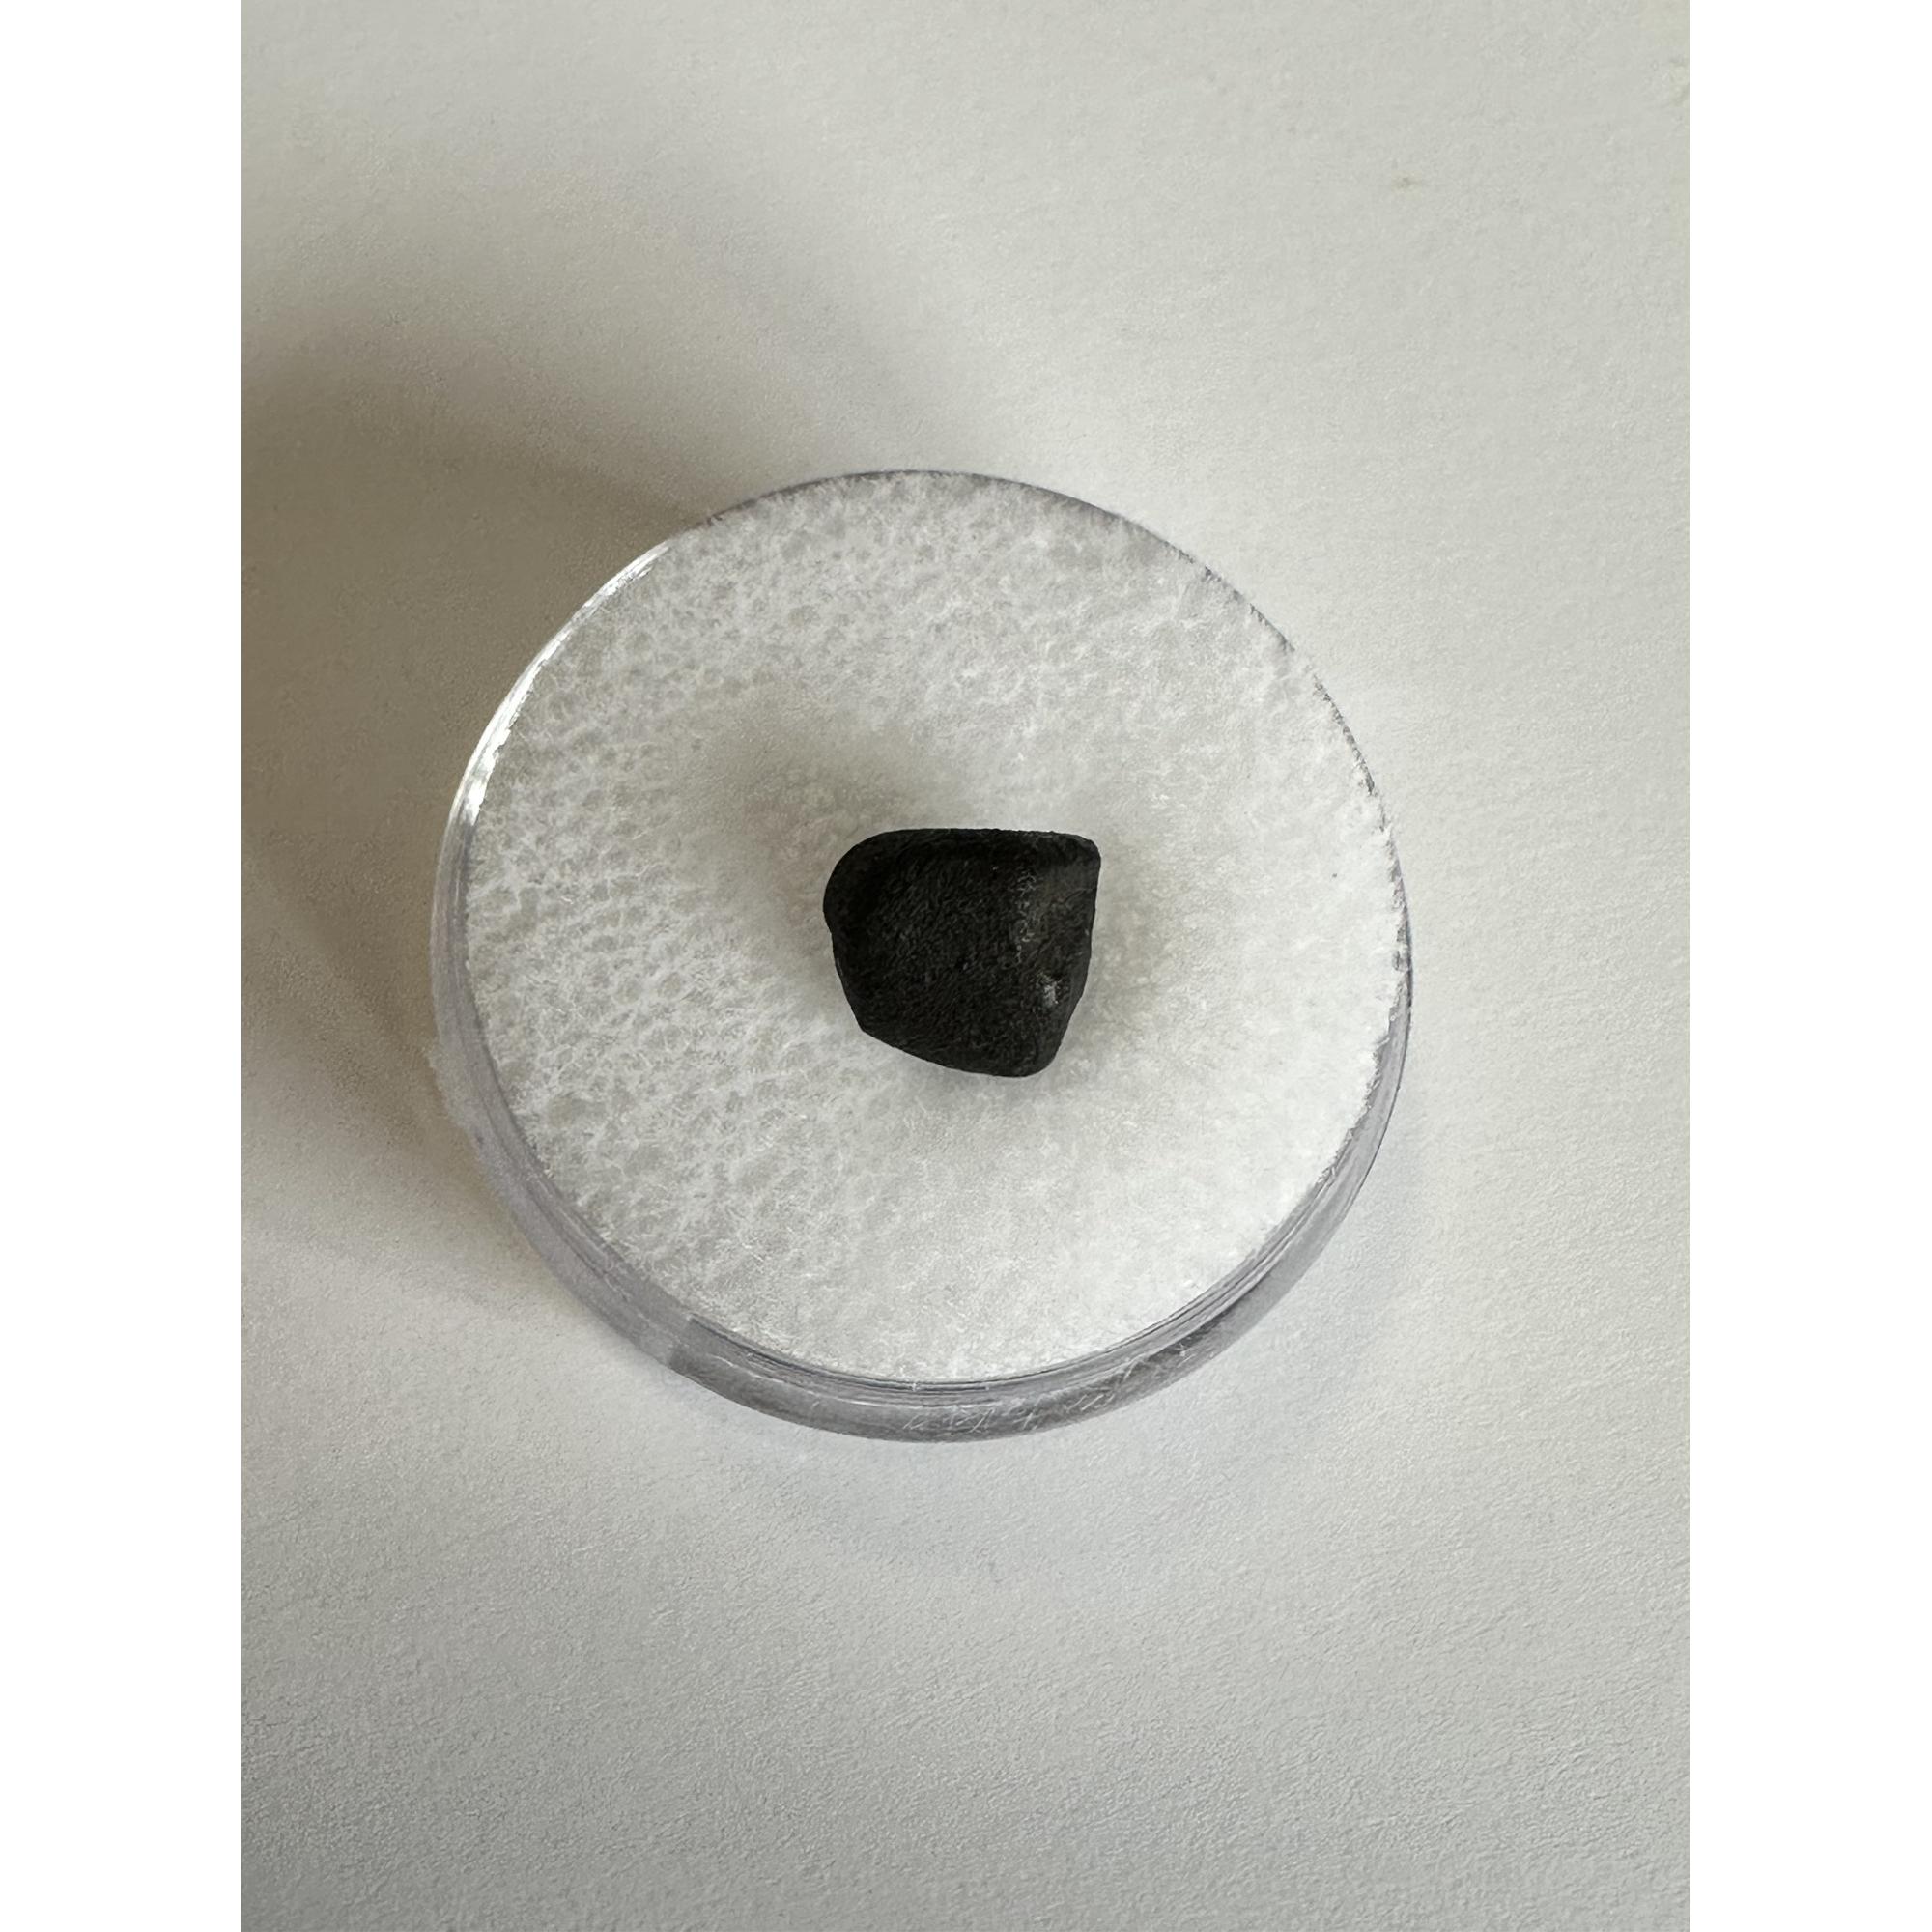 Chelyabinsk Meteorite, 0.63 grams Prehistoric Online